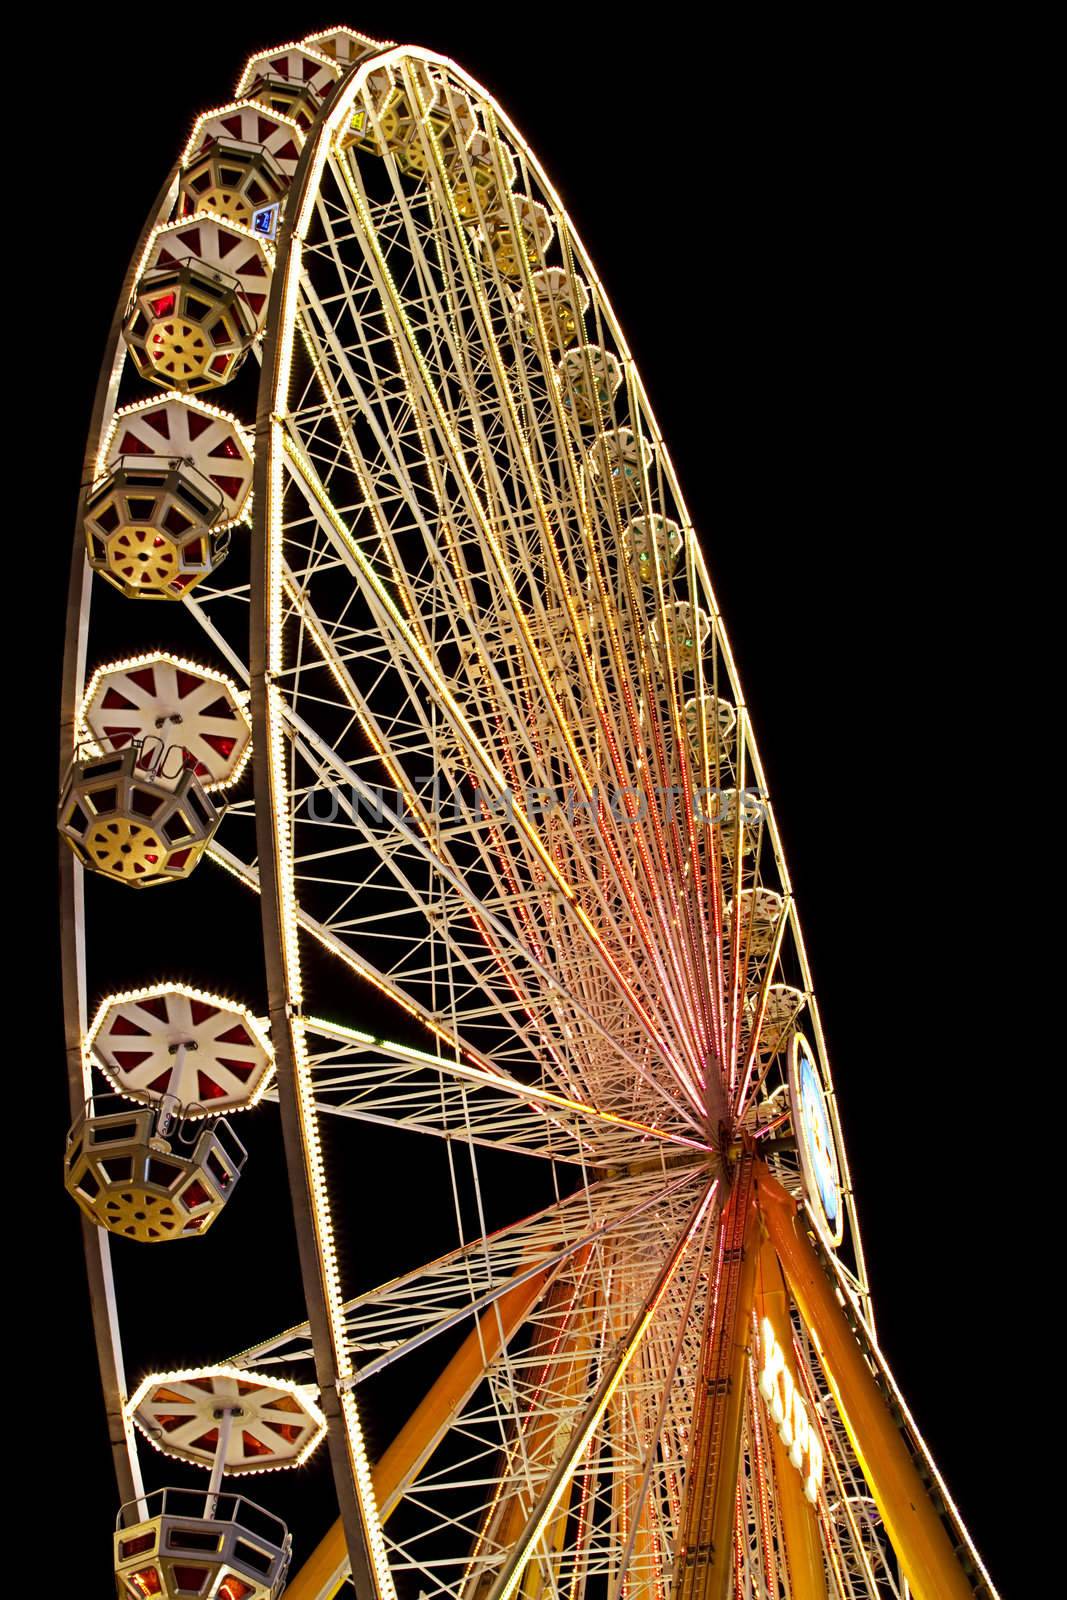 ferris wheel by night by RobStark